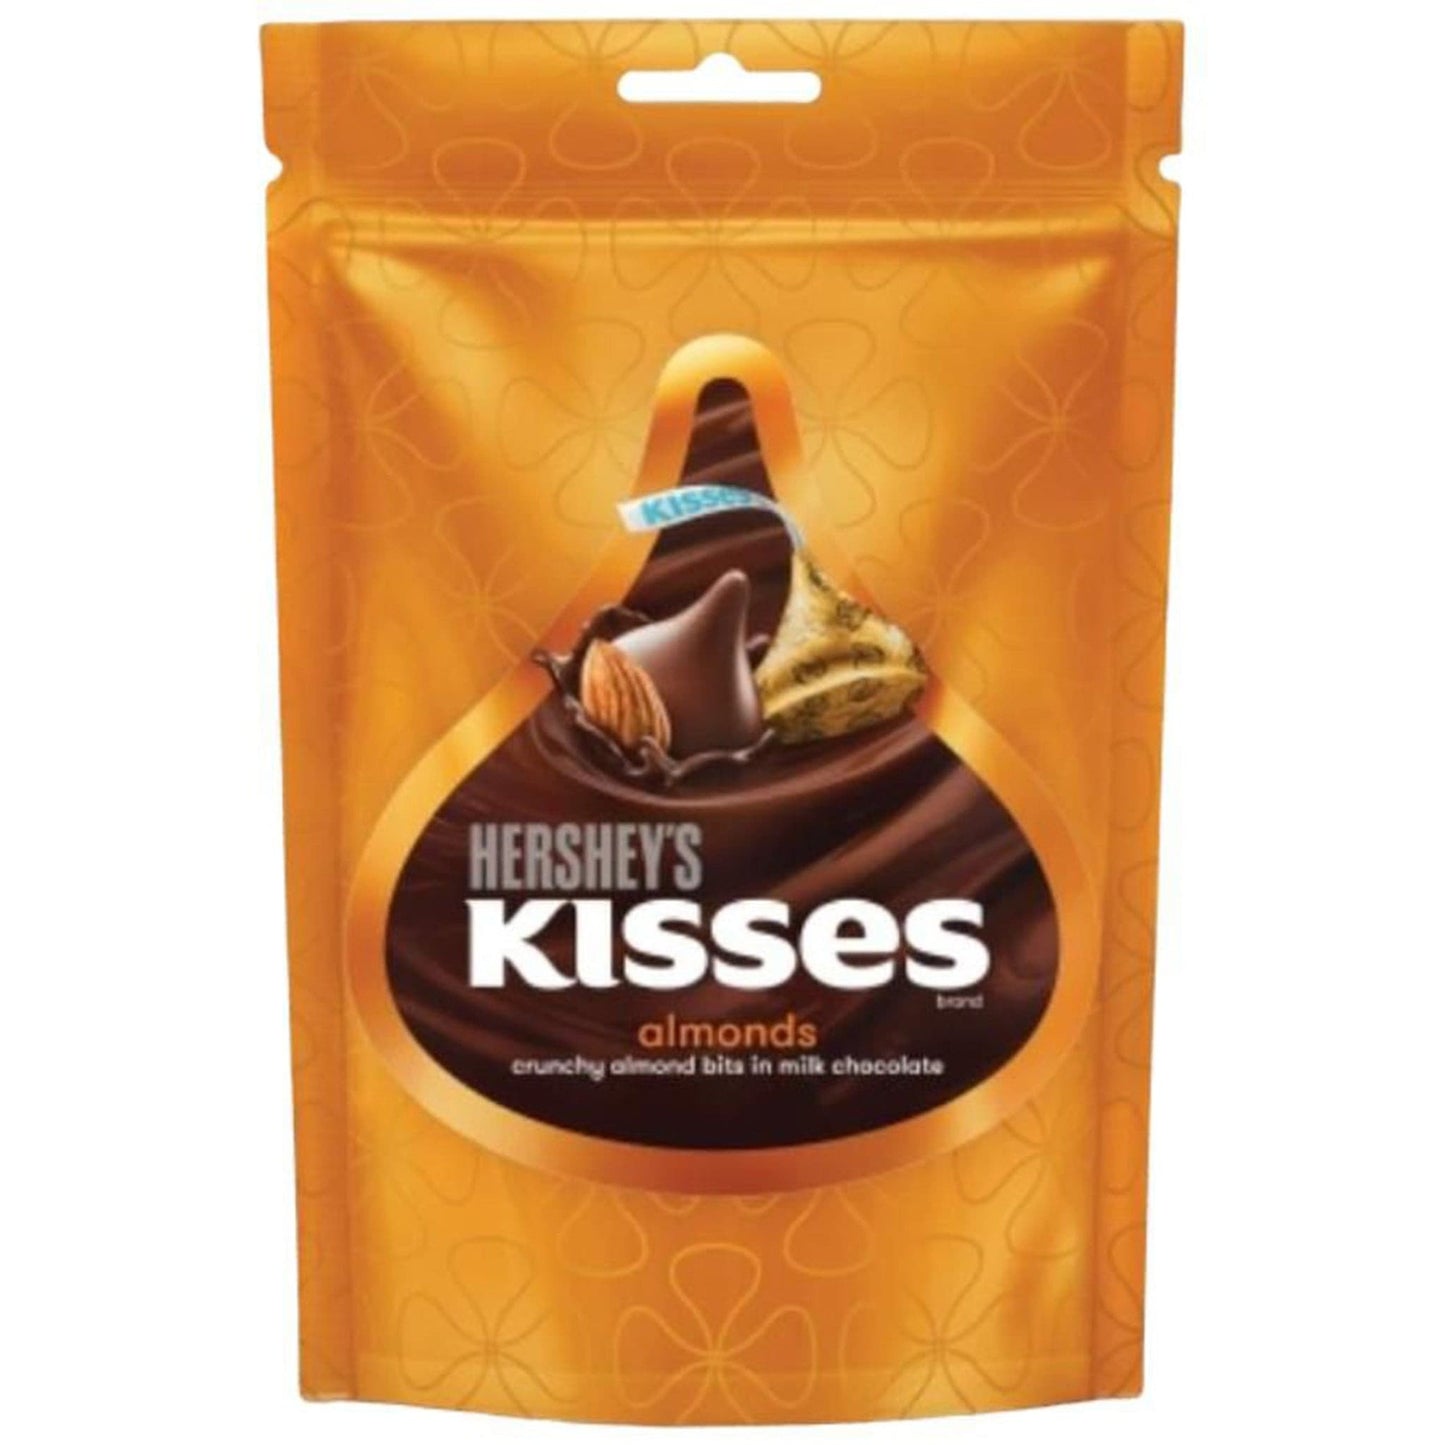 Hershey's Kisses Almonds Chocolate (7036973449403)